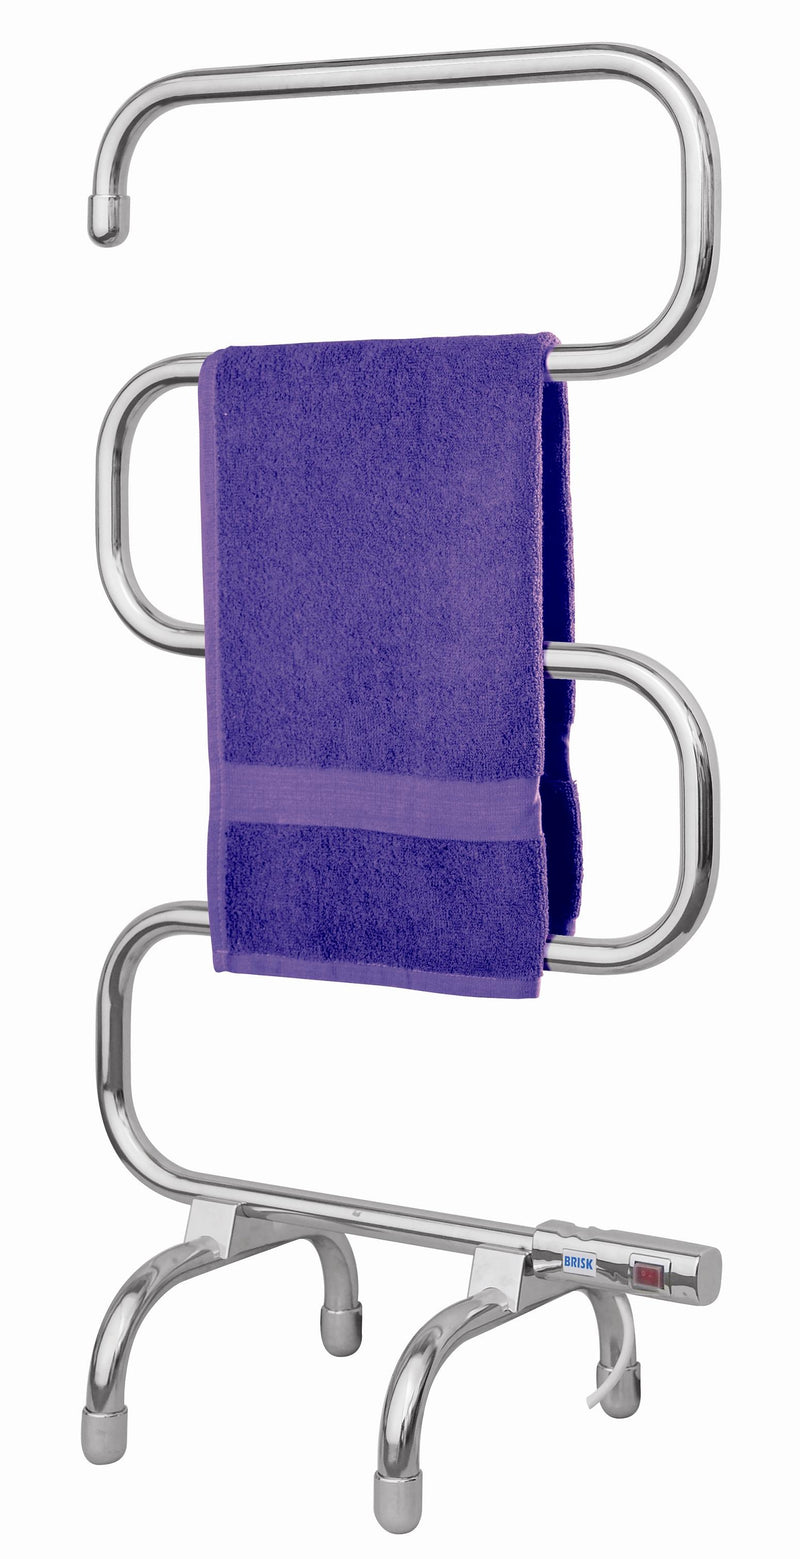 Heated Towel Rack - 70W - Sale Now